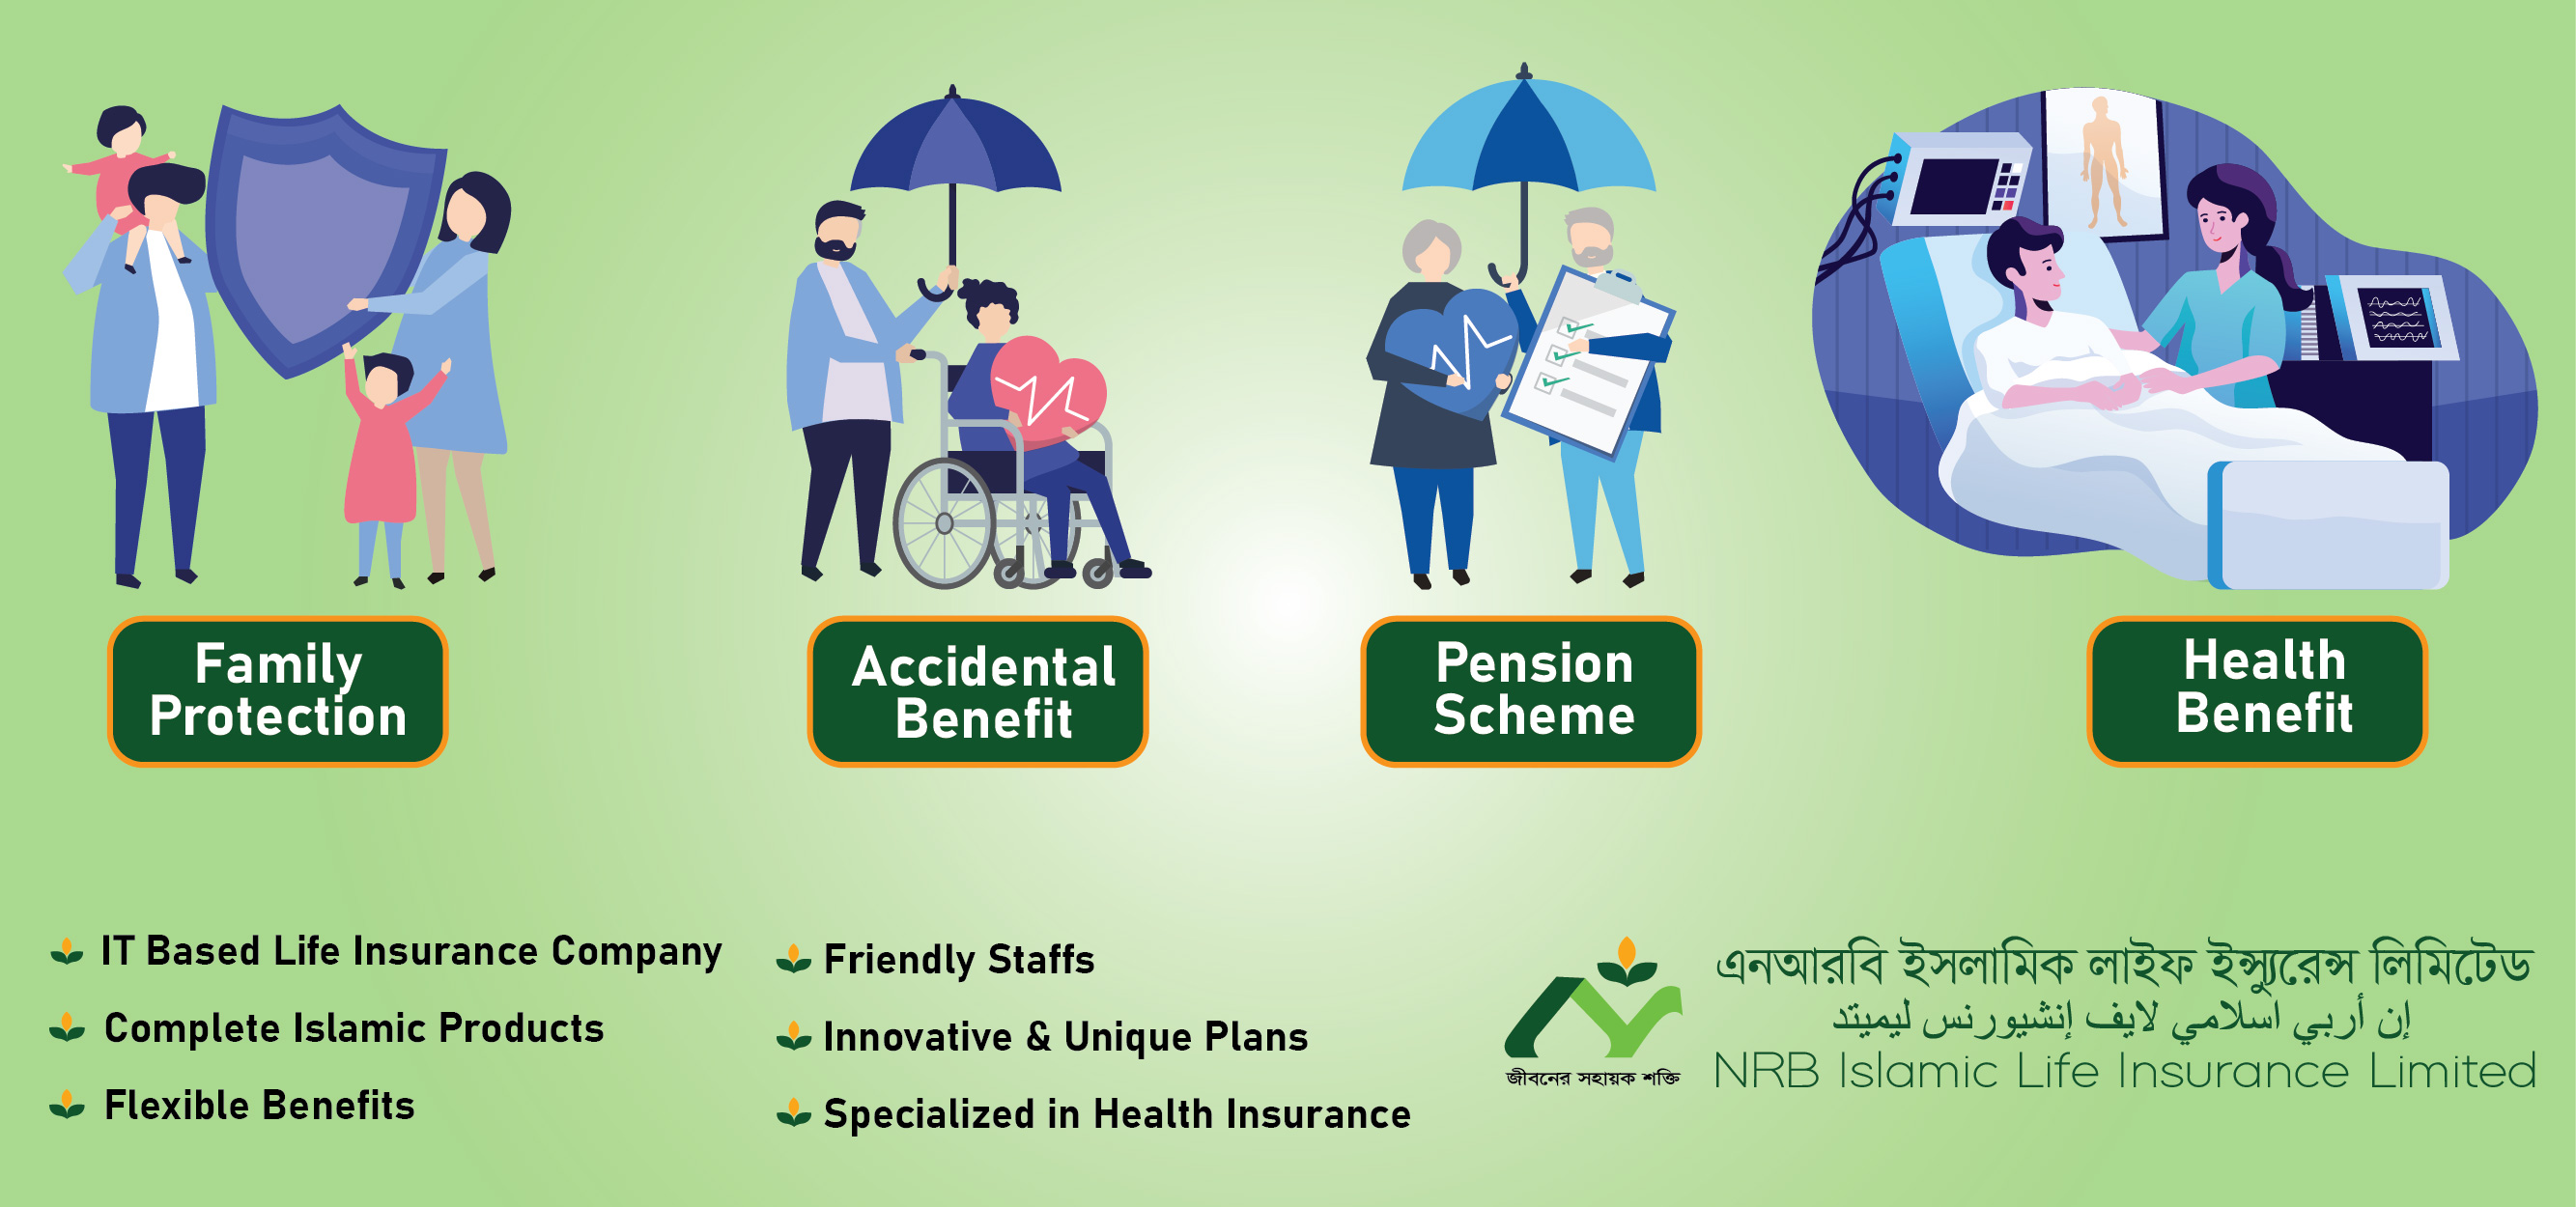 islami-life-insurance-bangladesh-bank-info